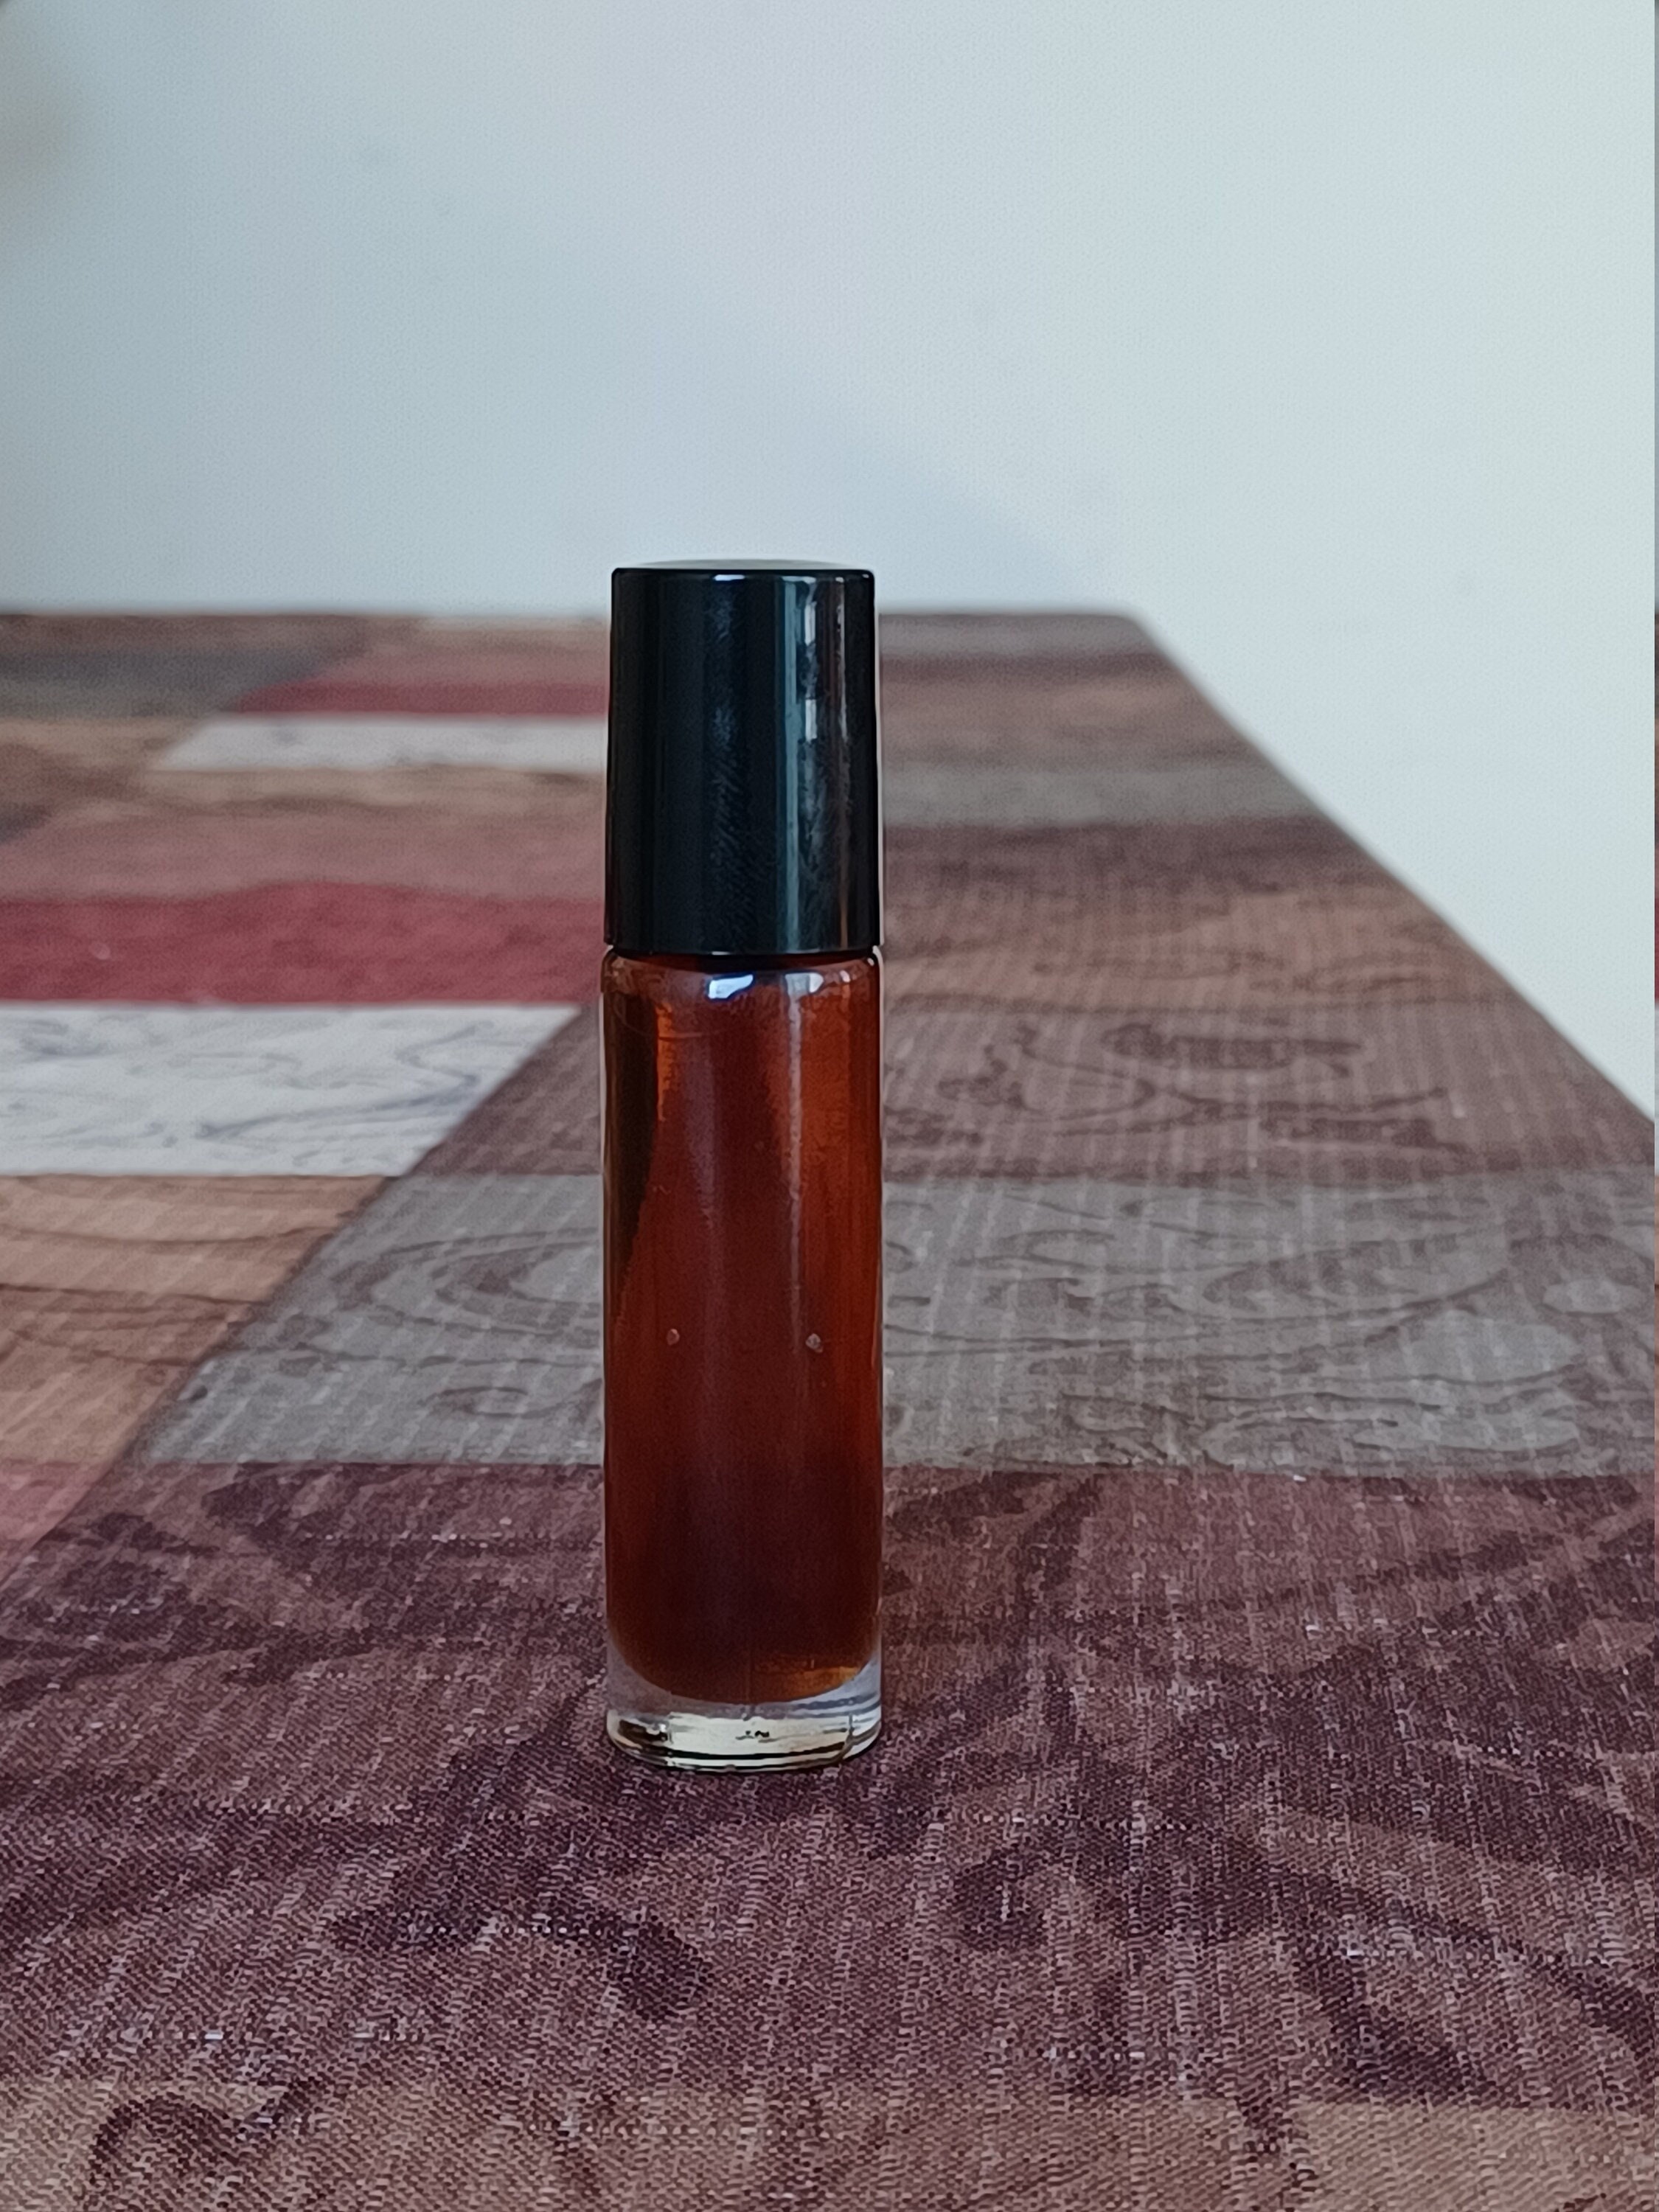 Somali Rose Fragrance Oil – Majestic Mountain Sage, Inc.